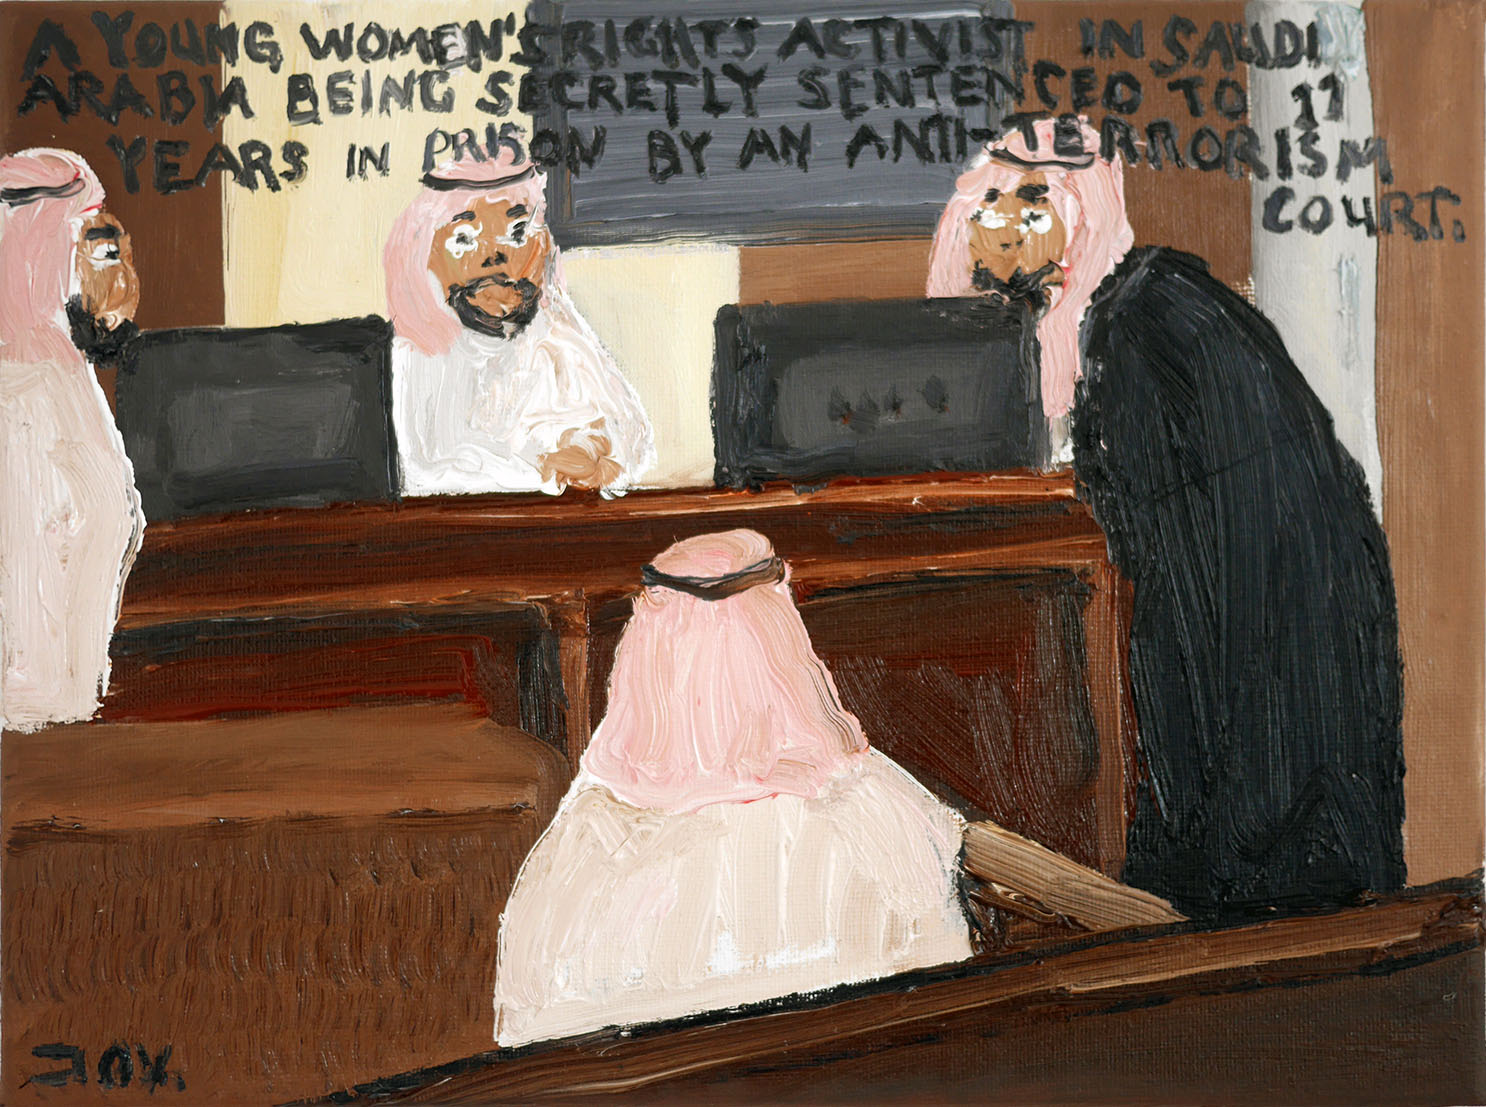 Bad Painting 358, court in Saudia Arabia, Manahel al-Otaibi